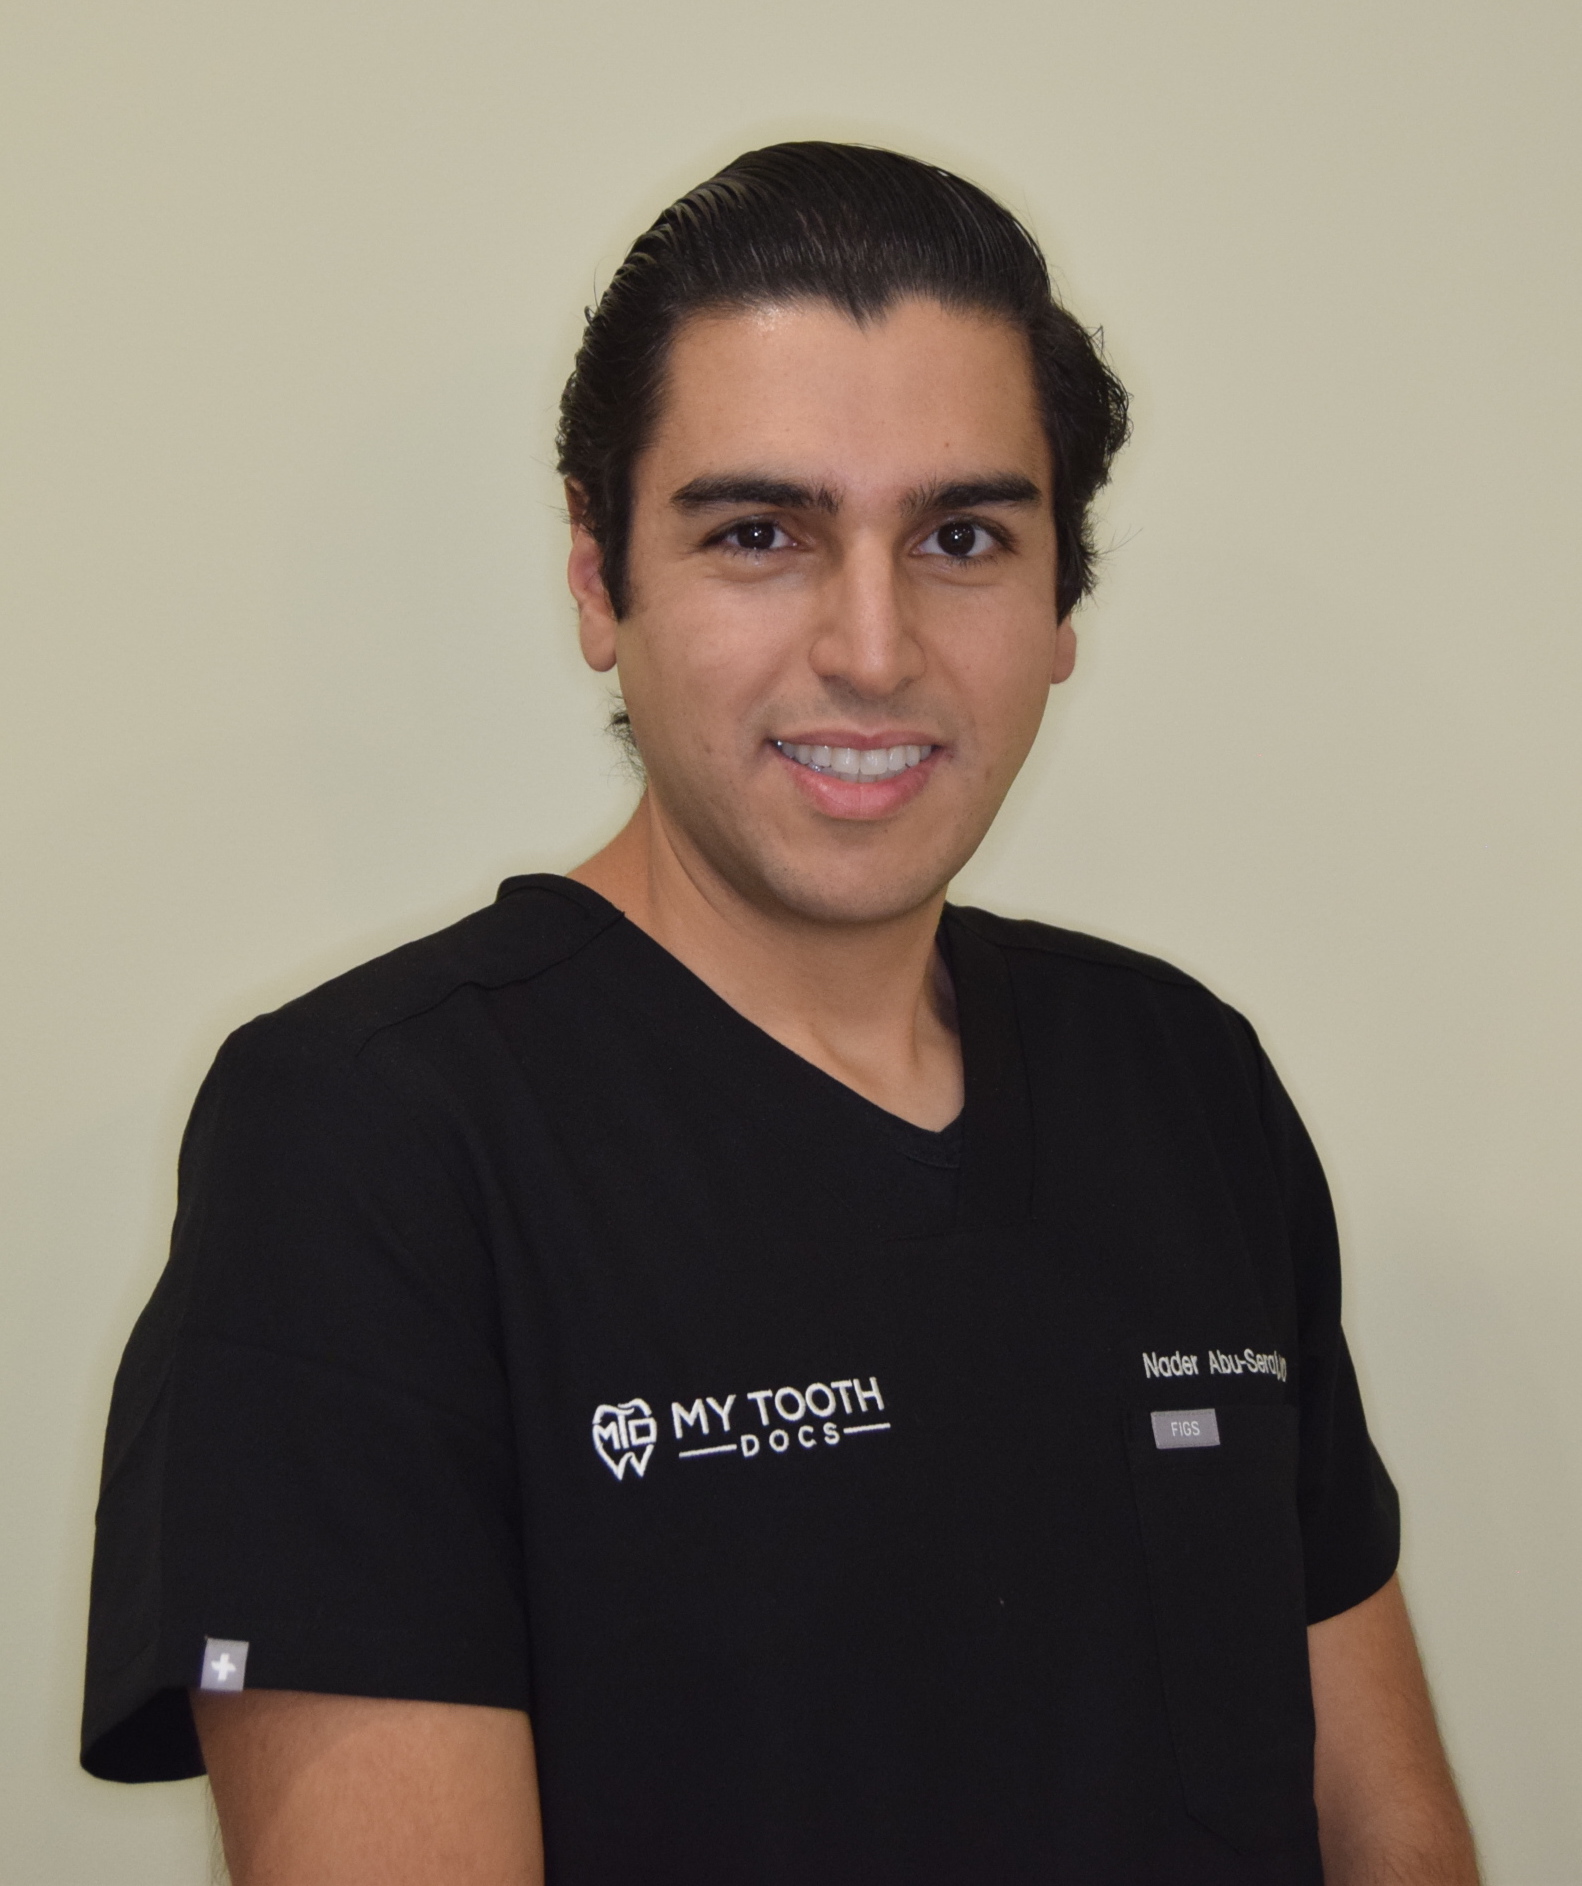 Dr. Nader Abu-Seraj, my tooth docs